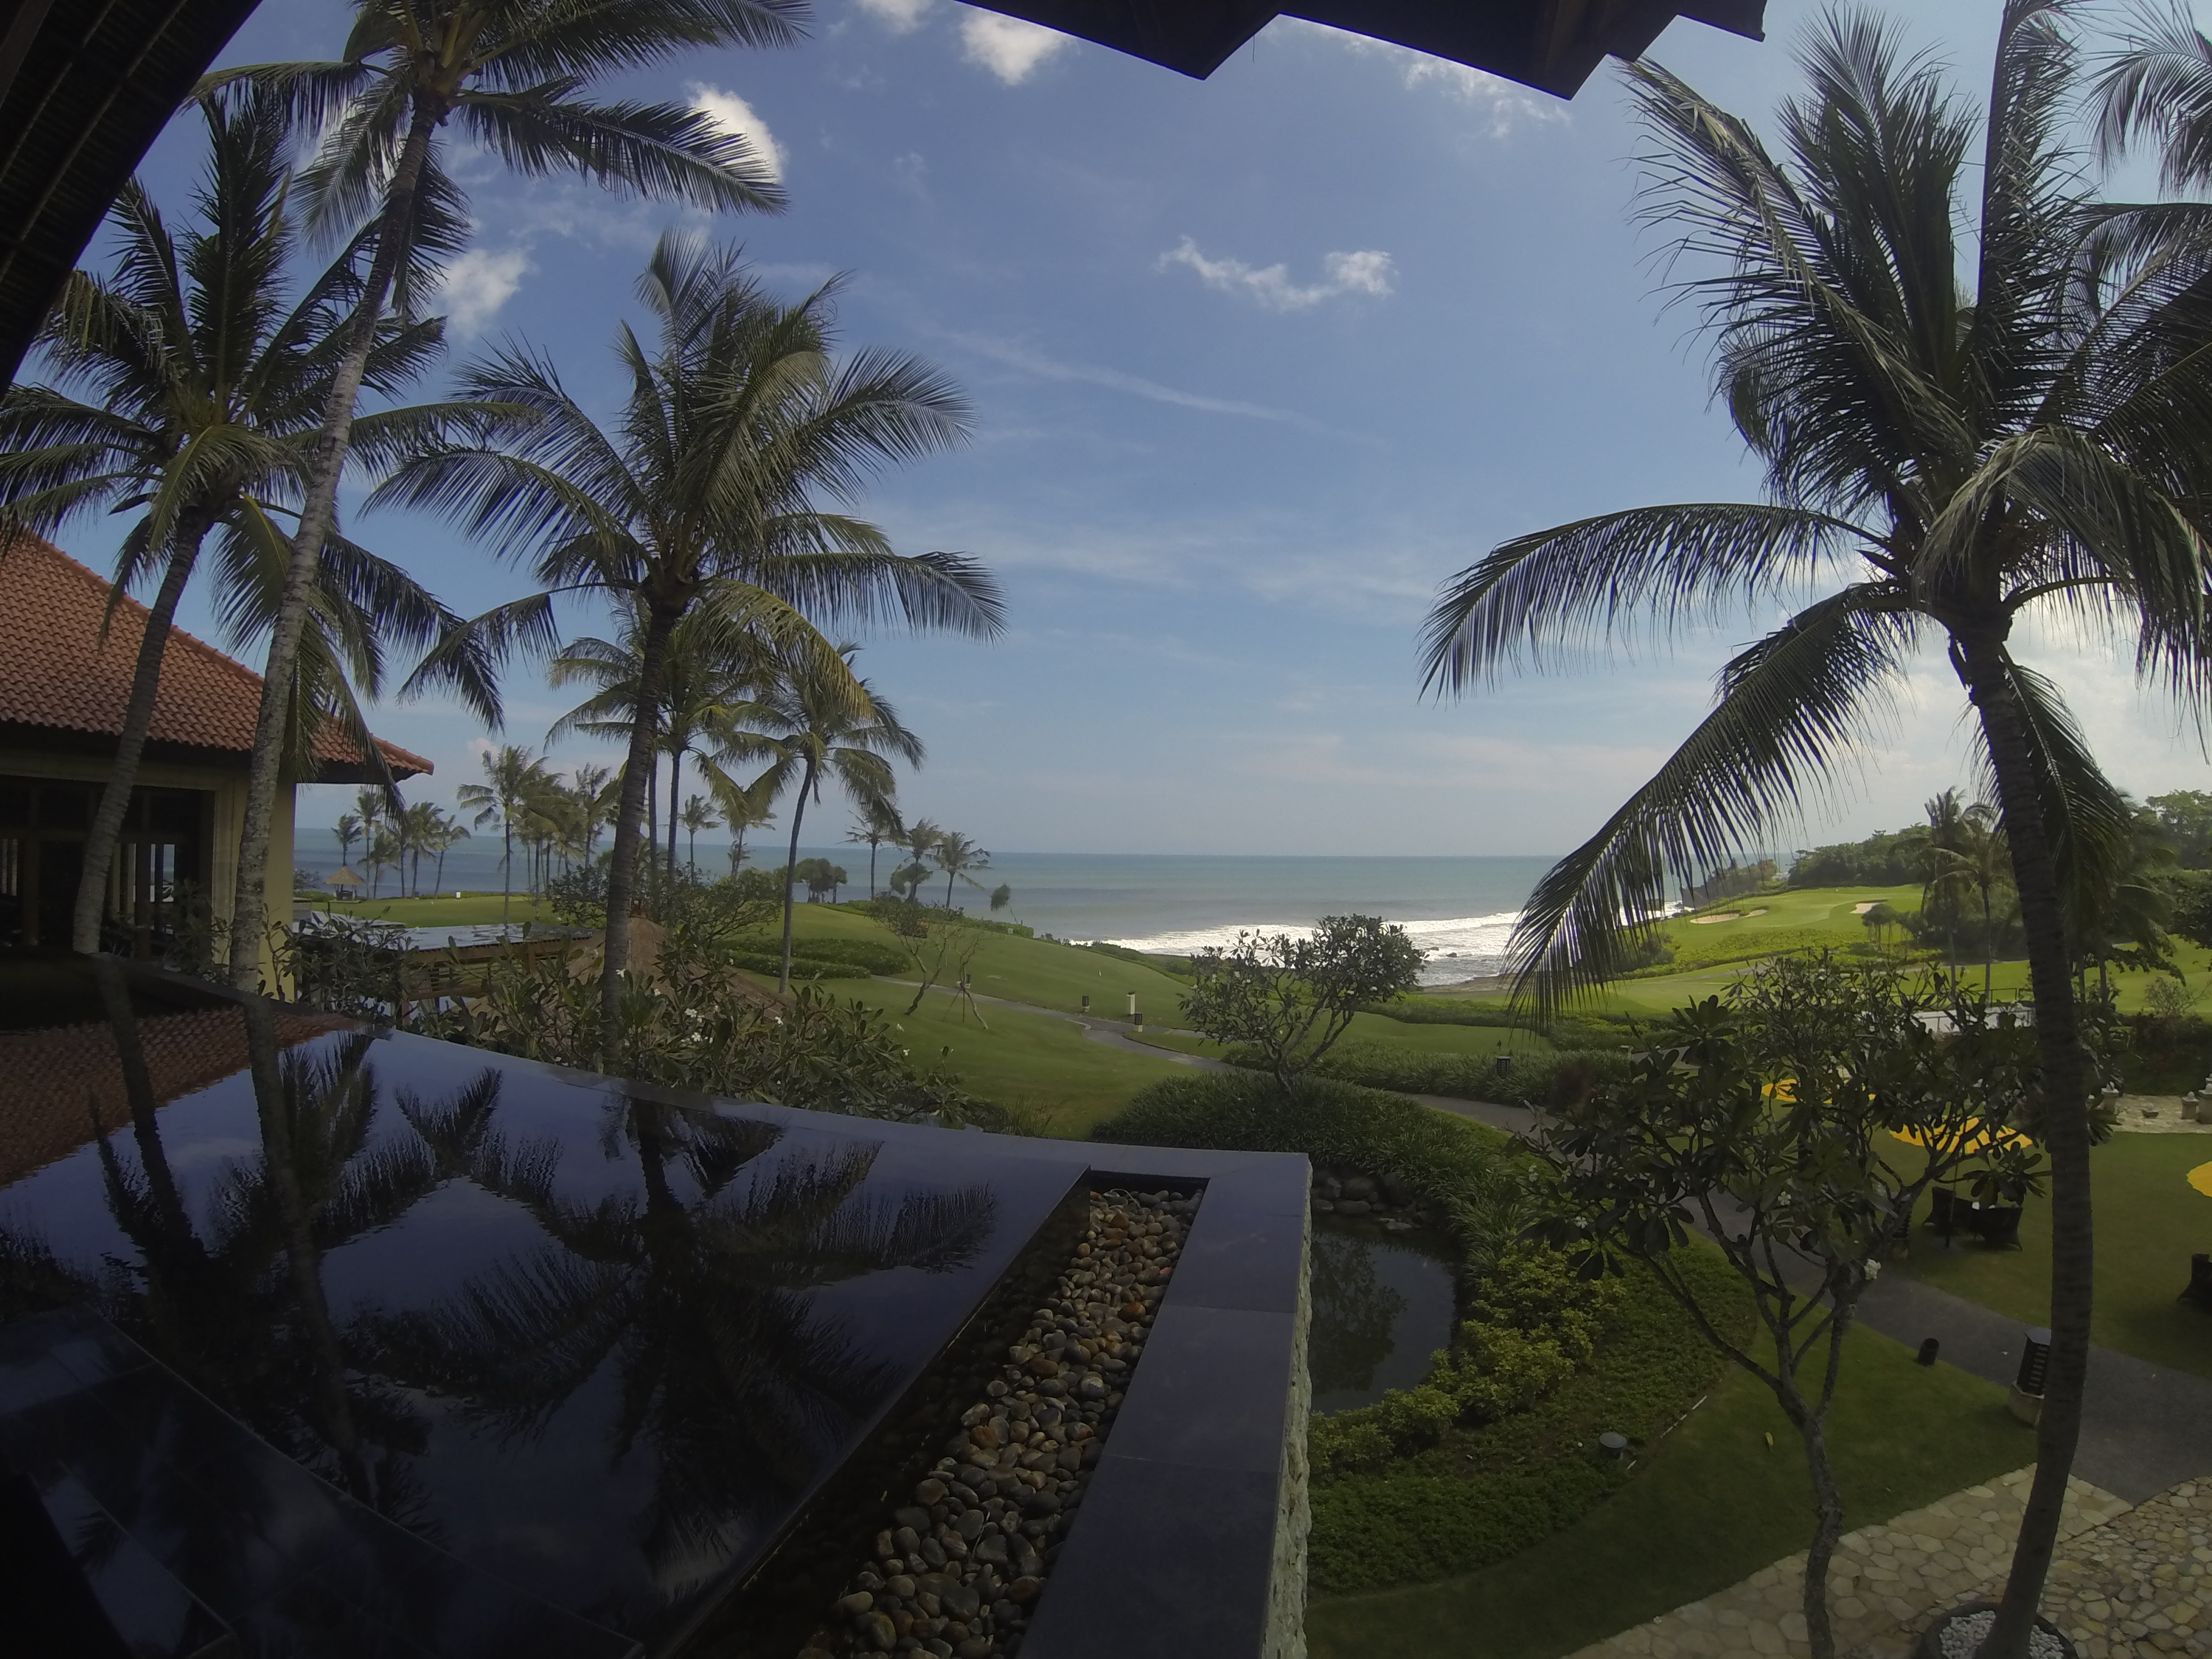 Bali – Part One // GoPro Video